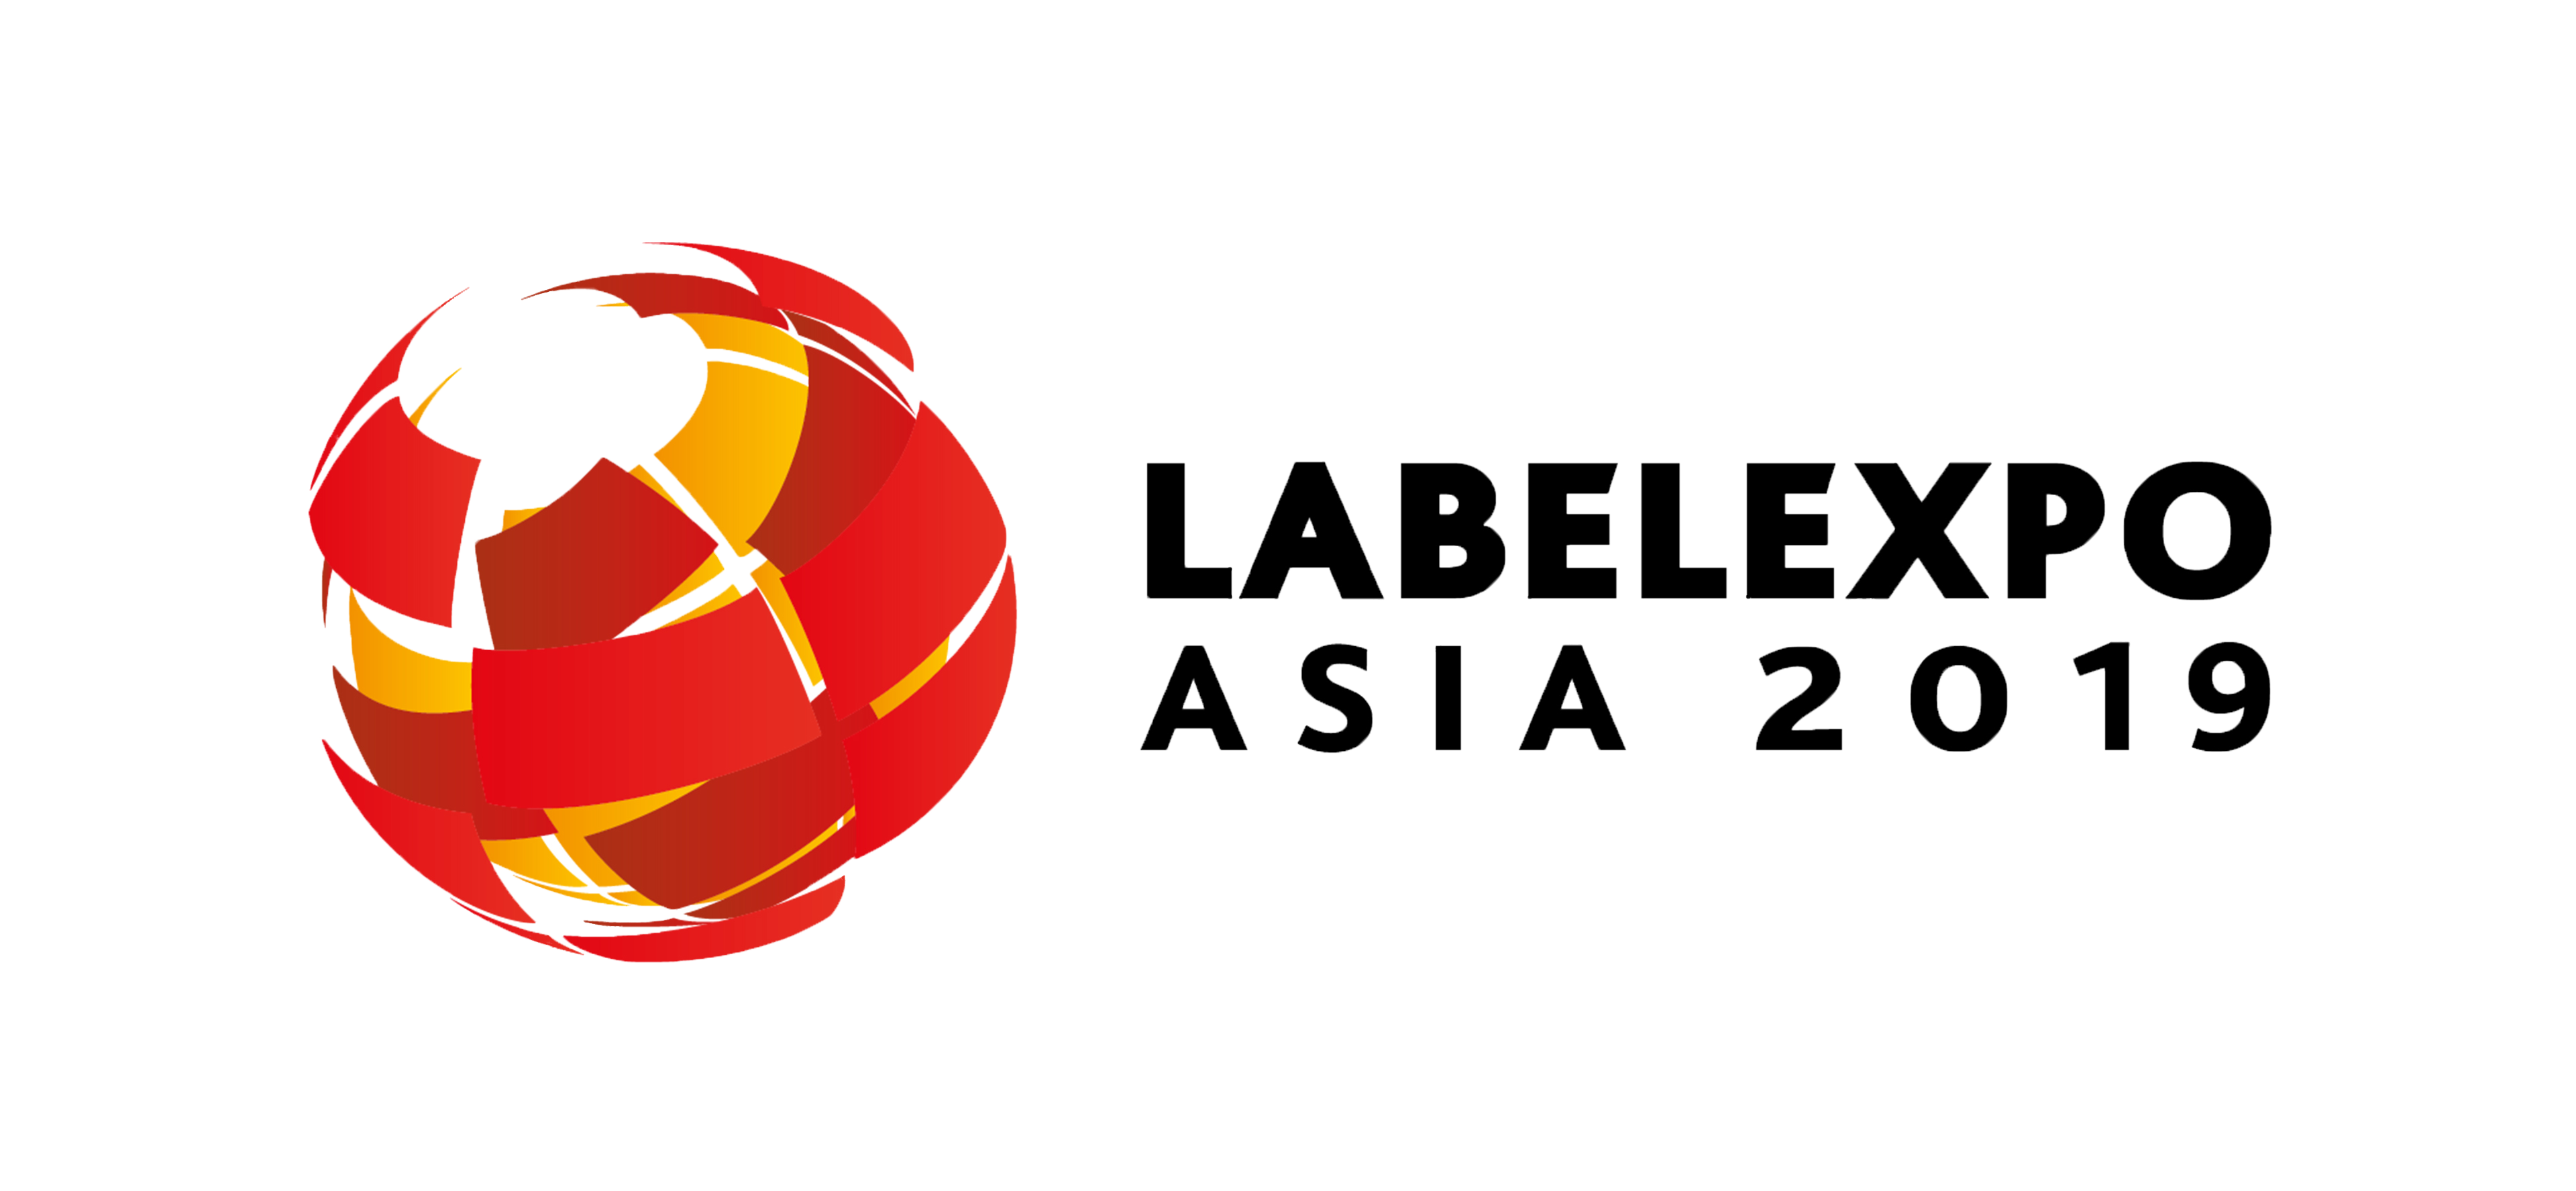 Labelexpo Asia 2019December,2019